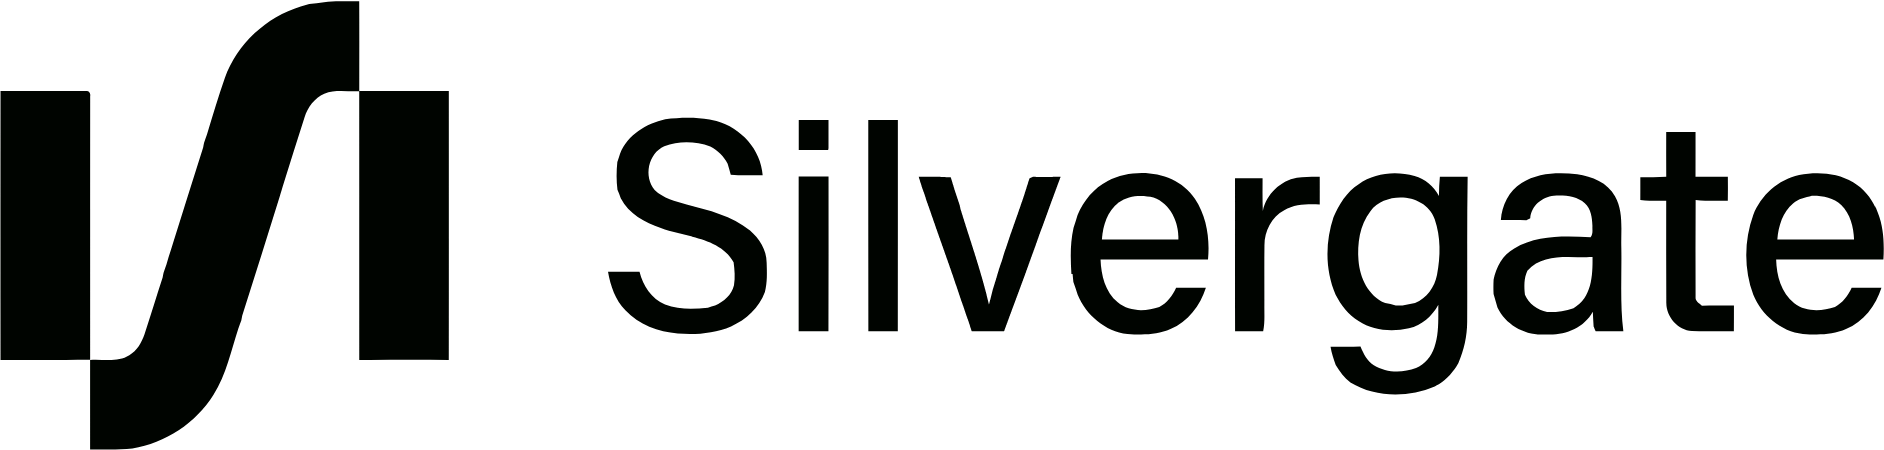 Silvergate Capital logo large (transparent PNG)